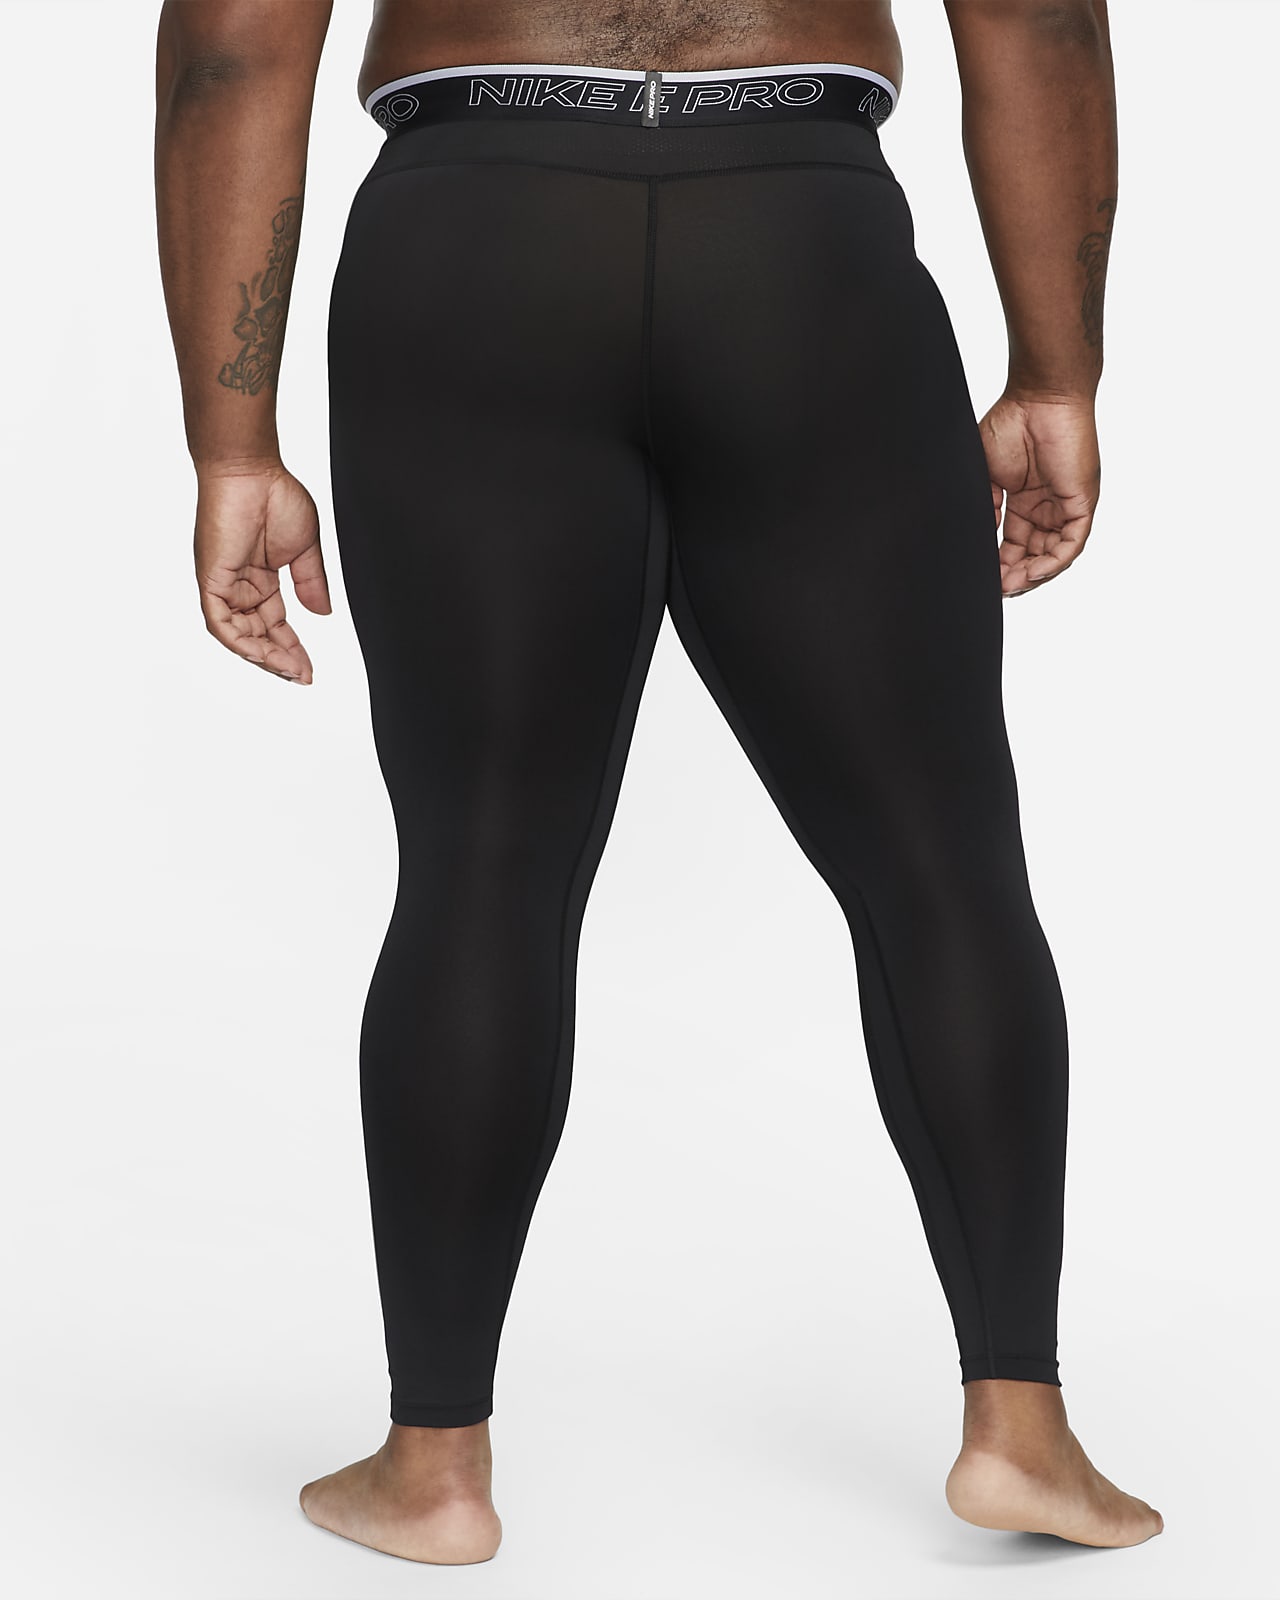 Nike Pro Combat Compression Leggings Mens XL Black Full Length 259864-010